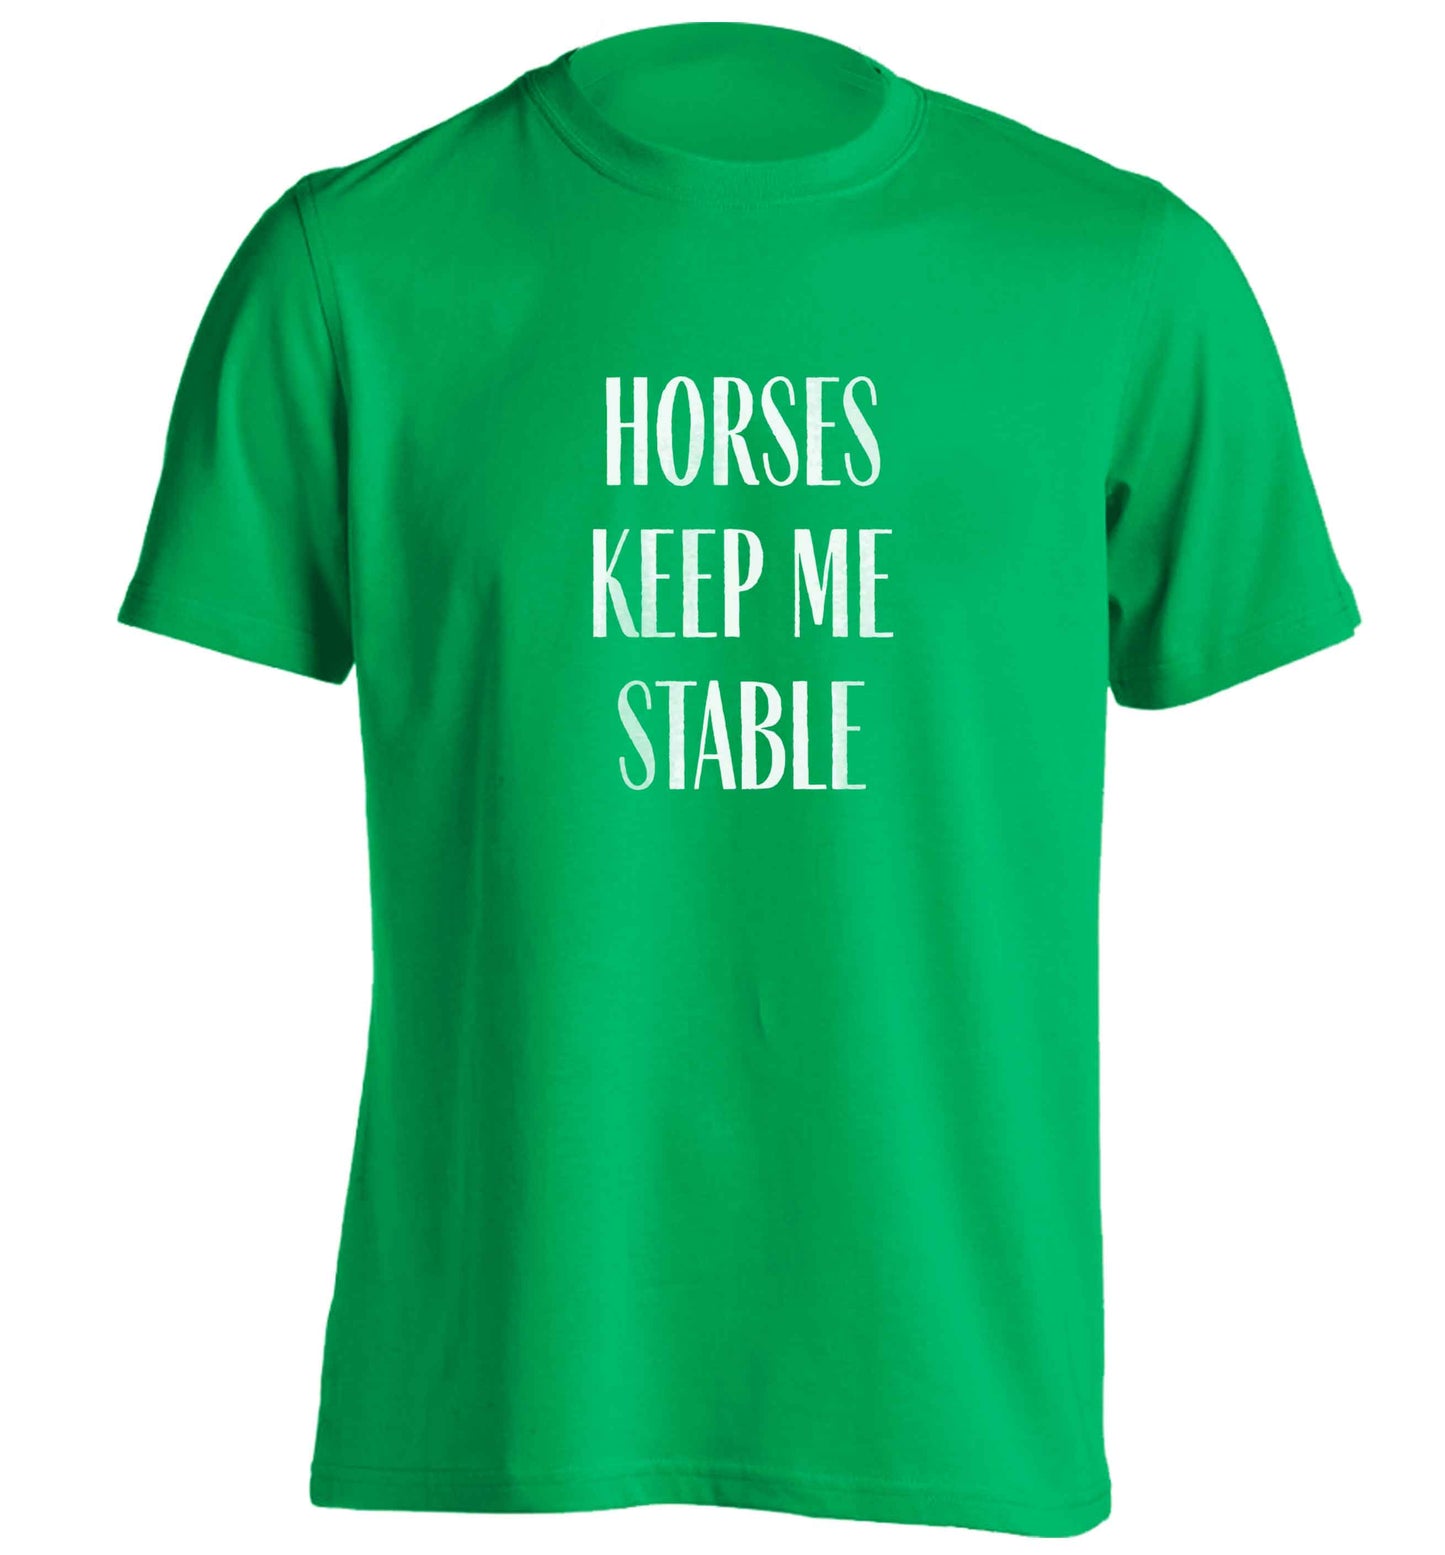 Horses keep me stable adults unisex green Tshirt 2XL